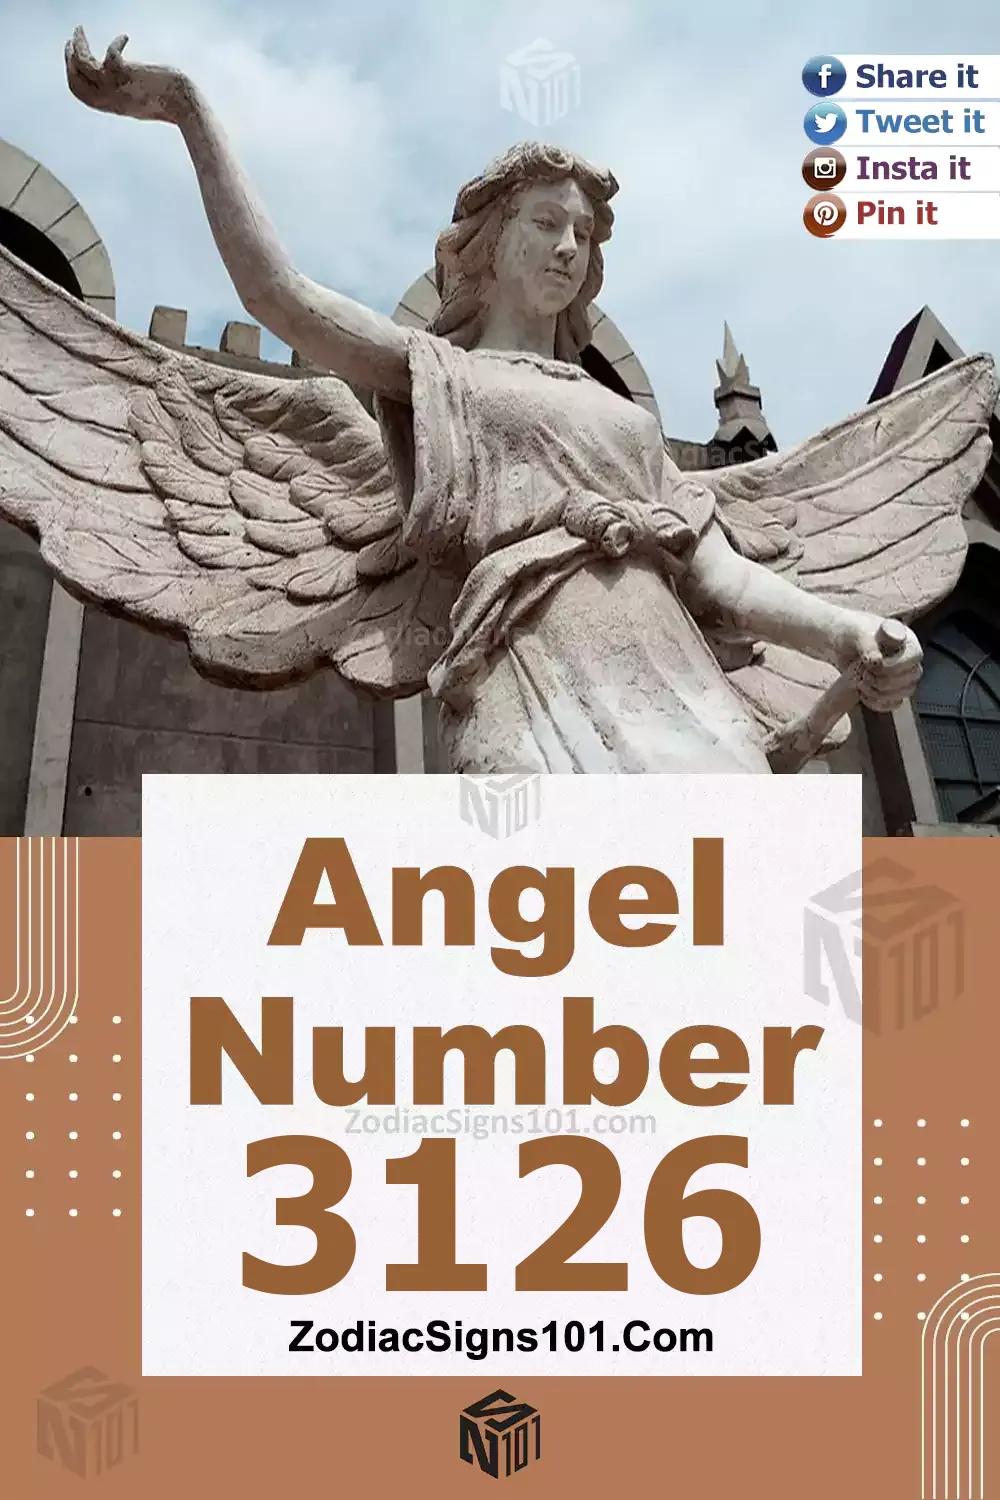 3126-Angel-Number-Meaning.jpg